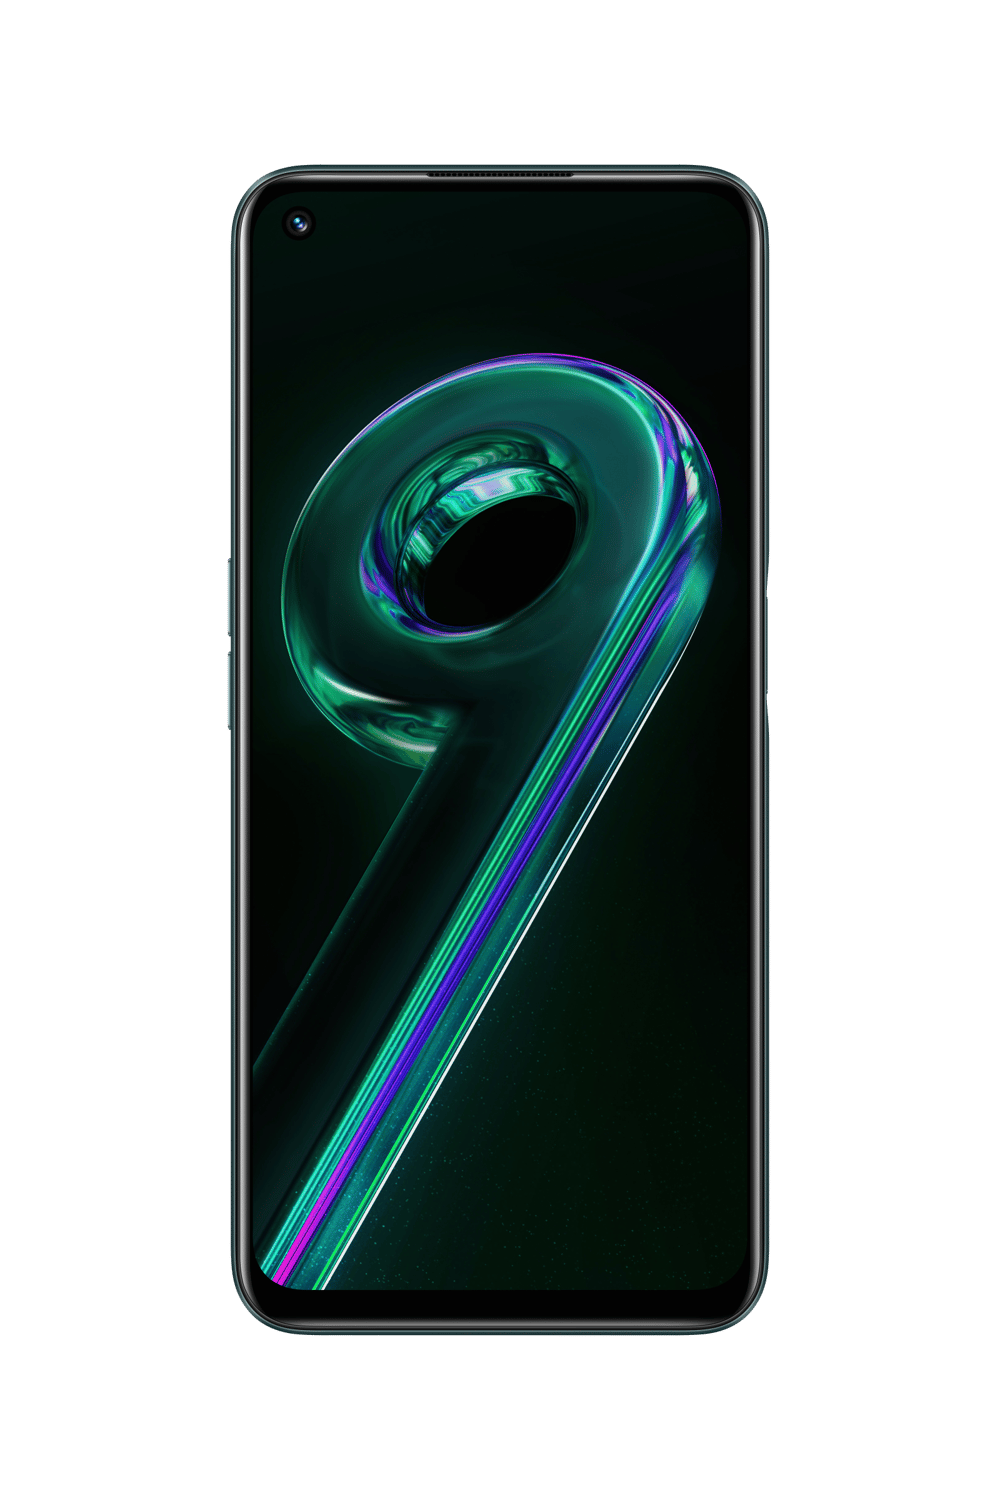 9 Pro 5G 8GB + 128GB Aurora Green Smartphone Smartphone